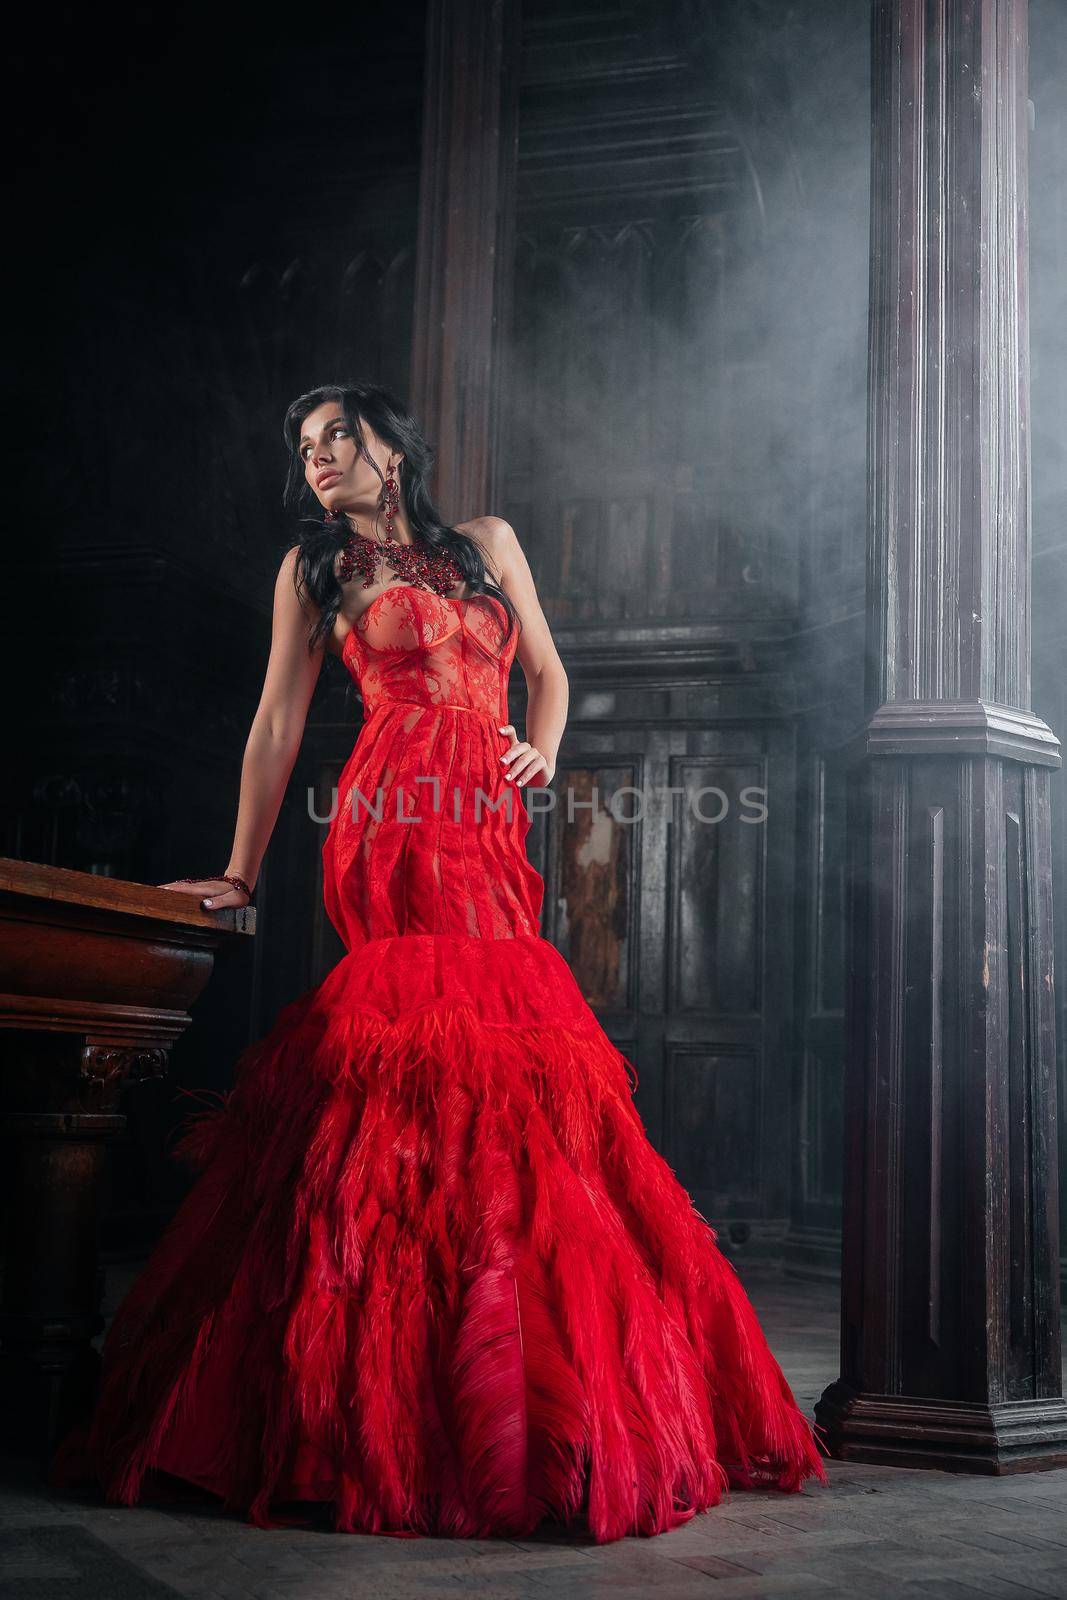 Woman Vintage Red Dress Old Castle Beautiful Princess In Seductive Dress Elegant Caucasian Female Fairy Tale story